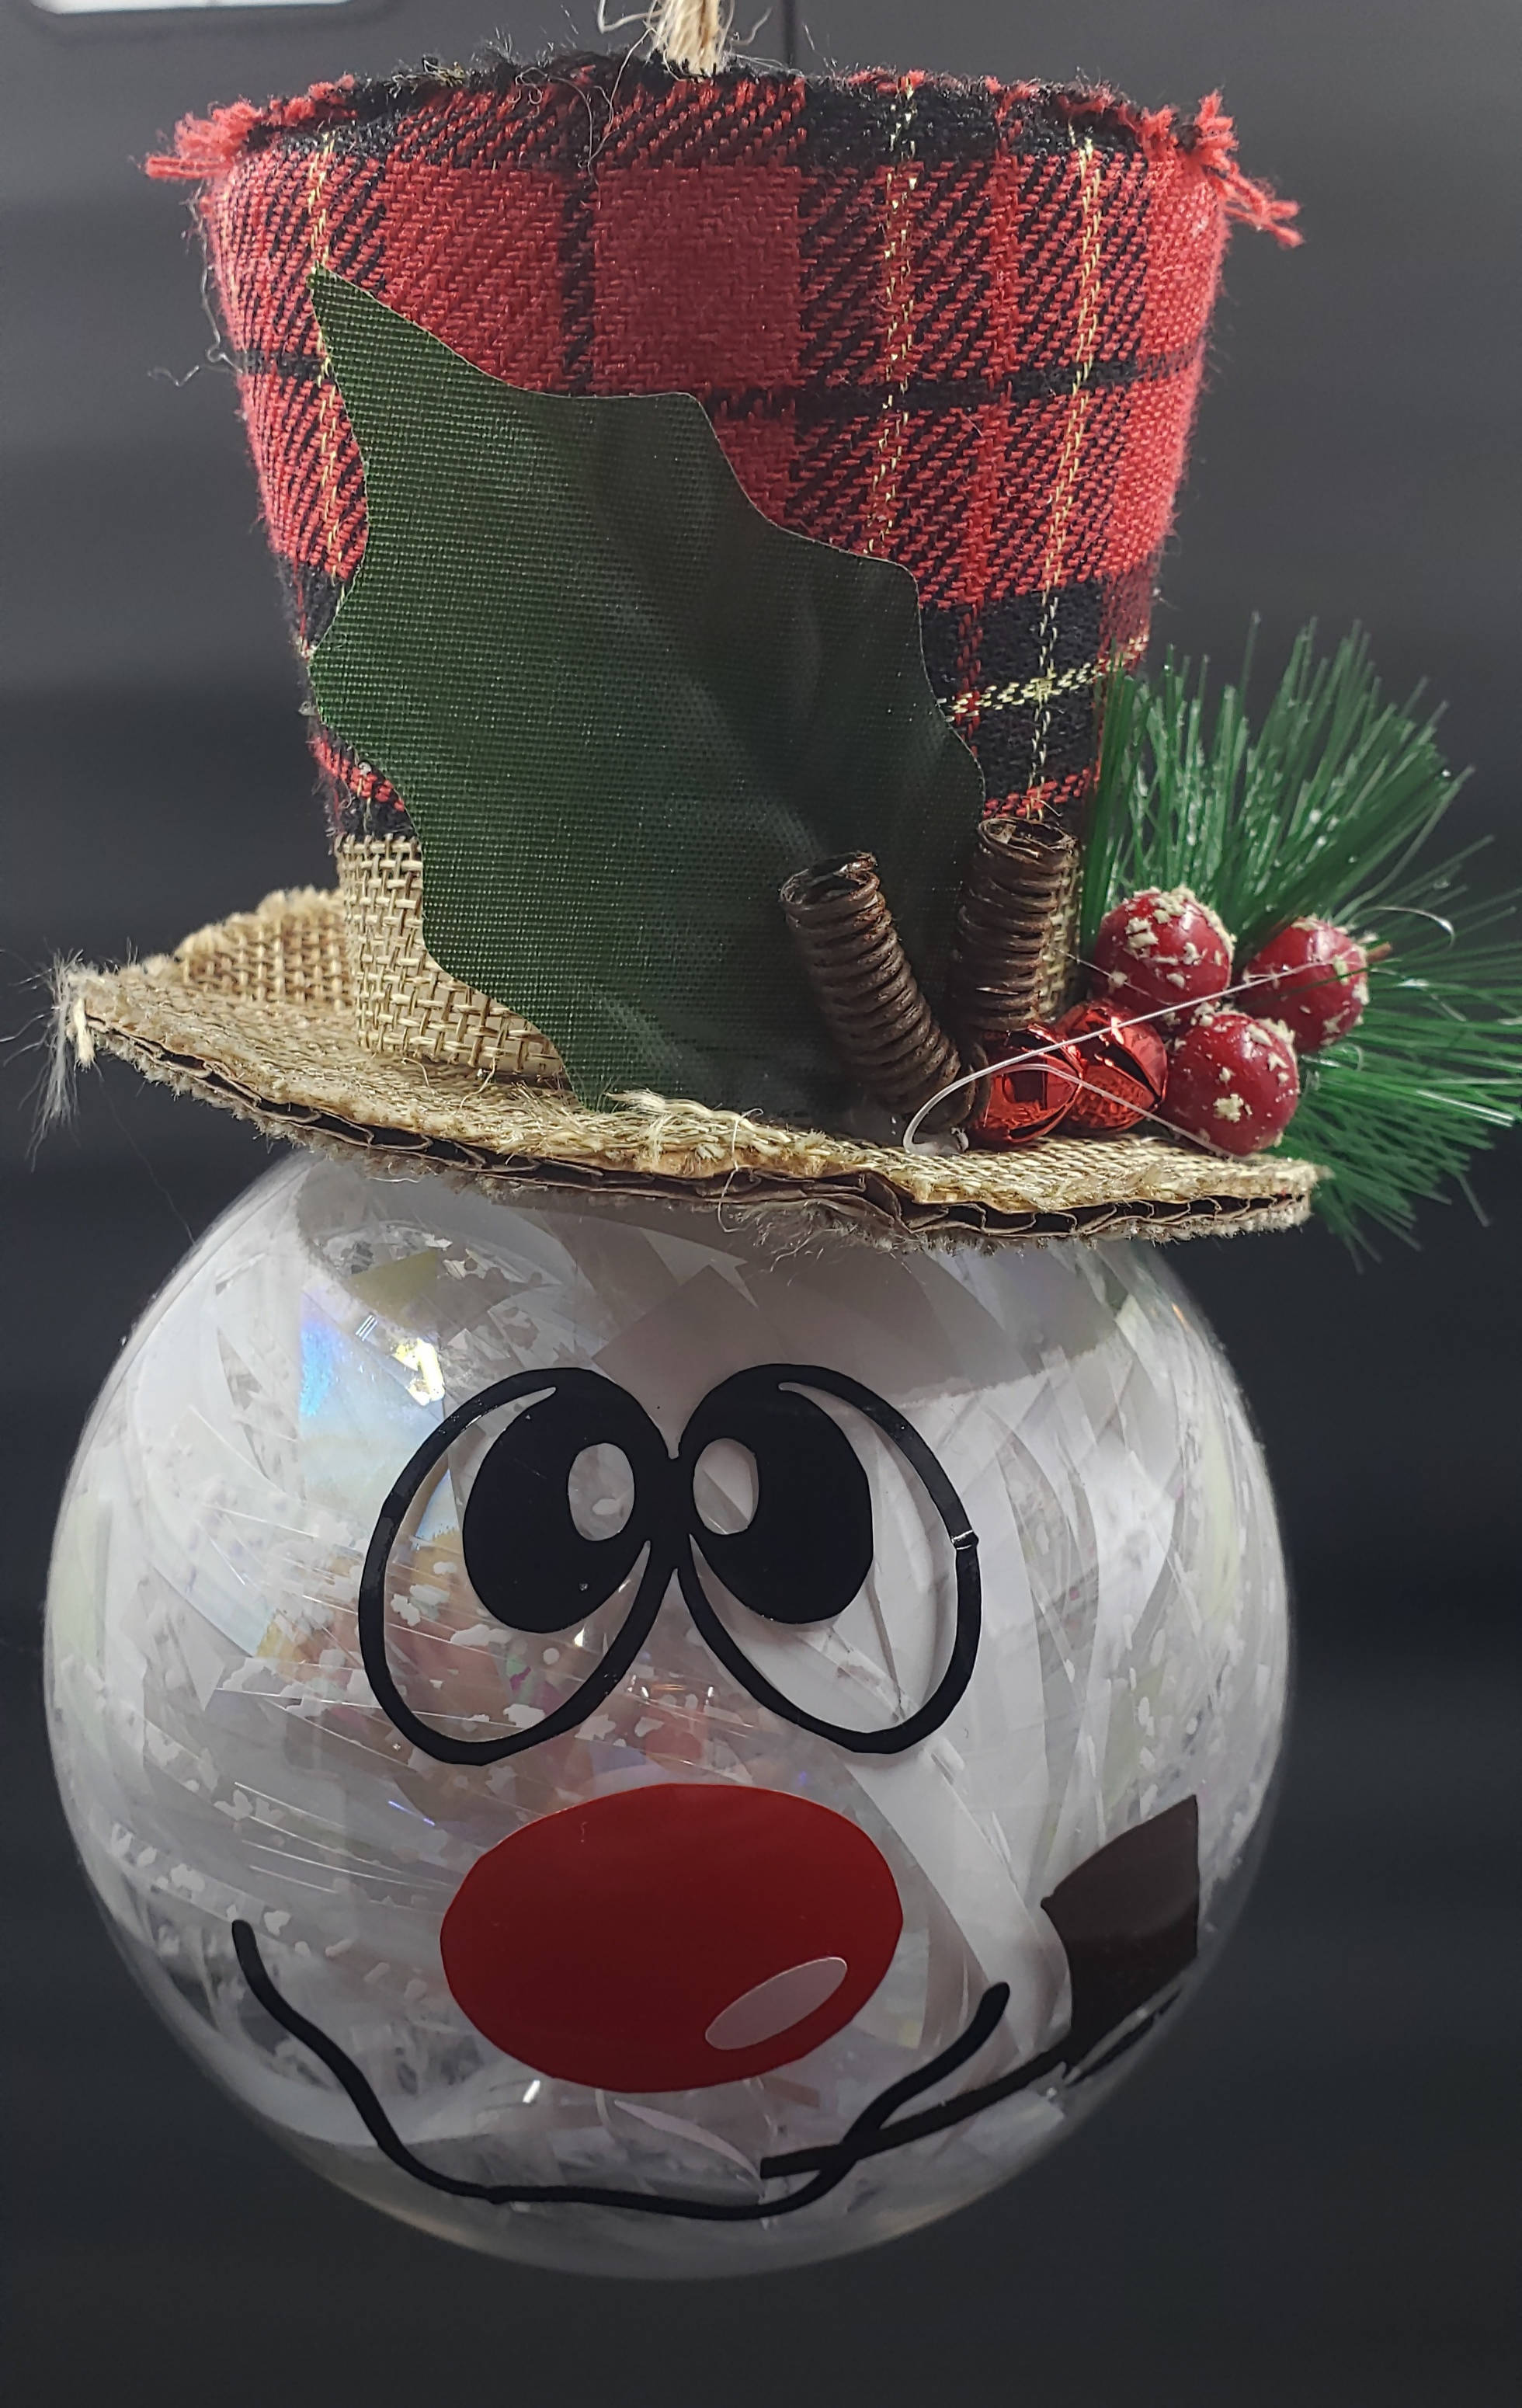 Frosty Ornament